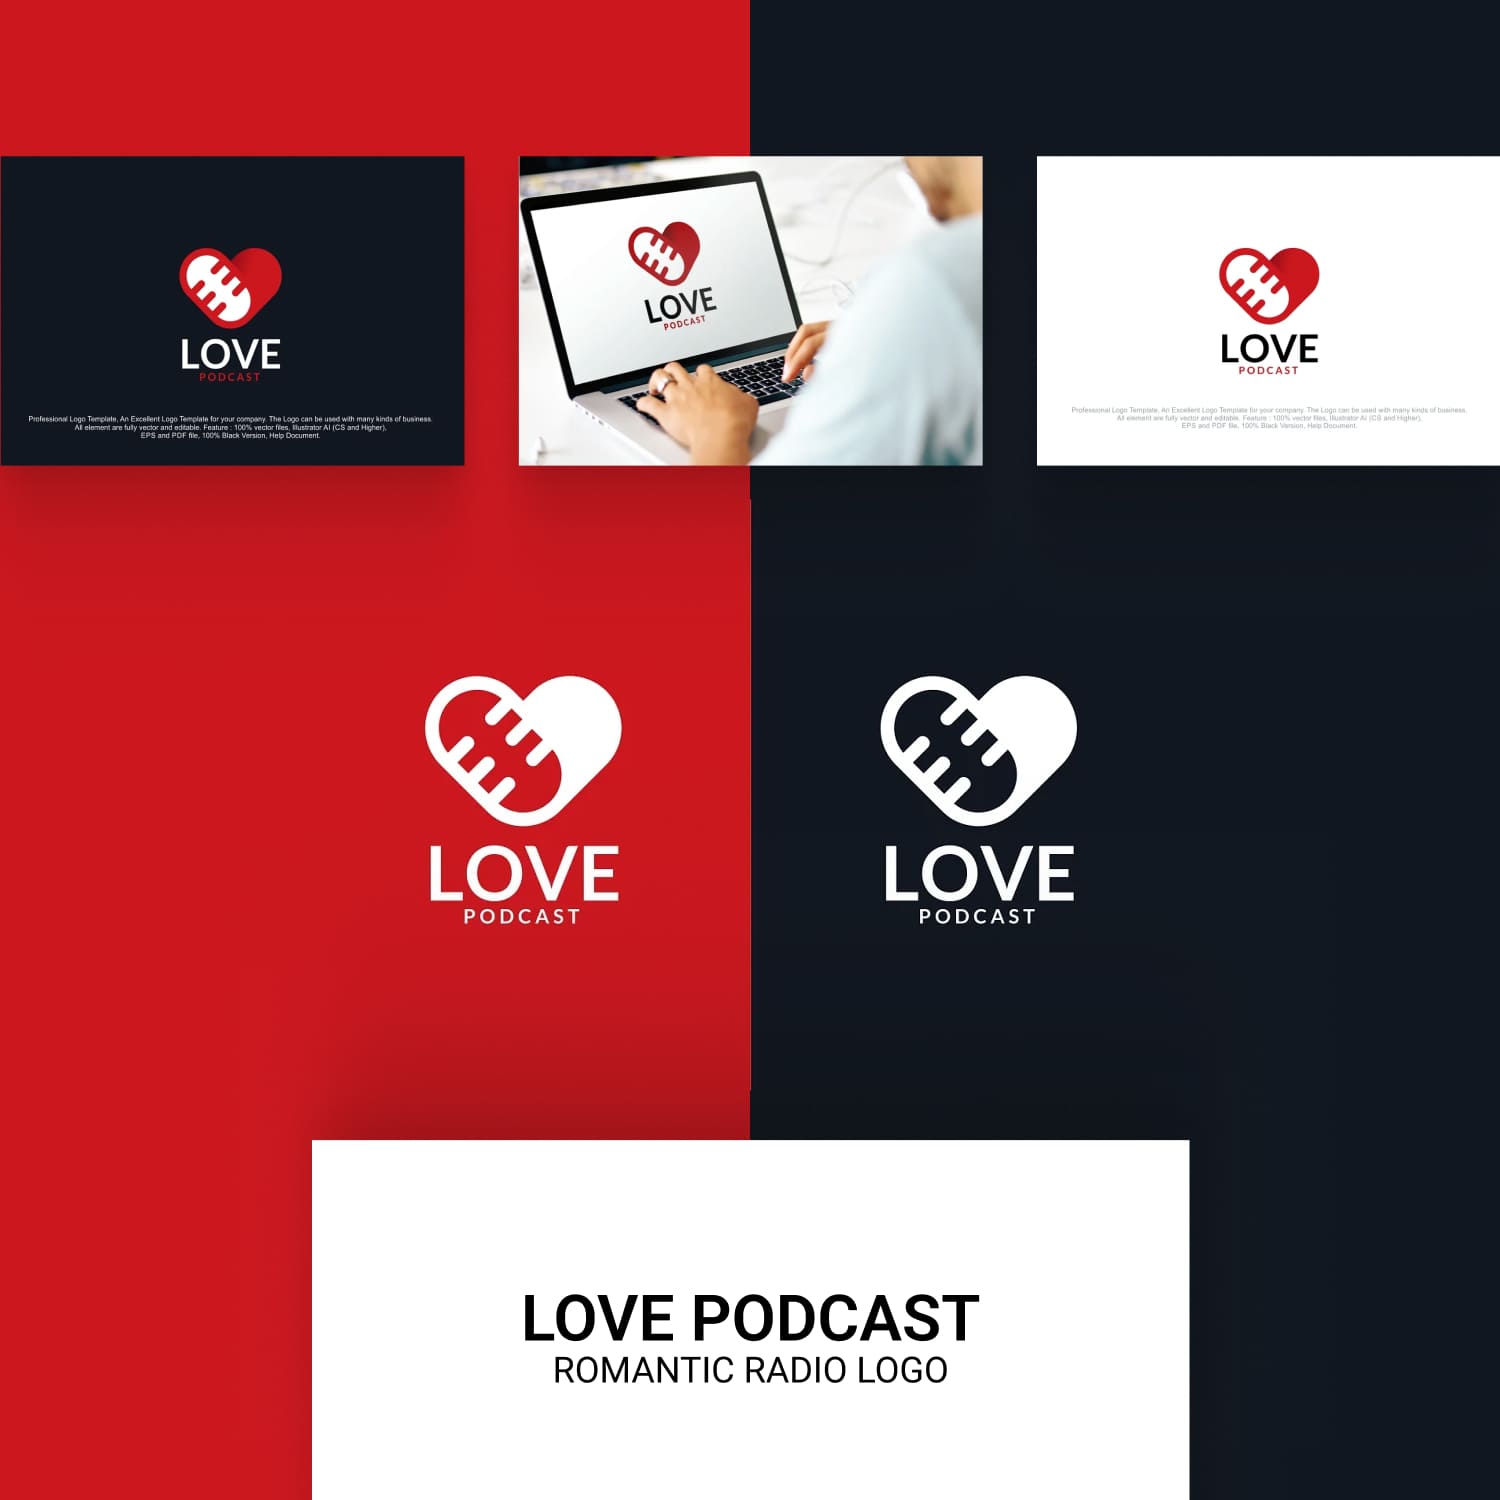 Love Podcast - Romantic Radio Logo.